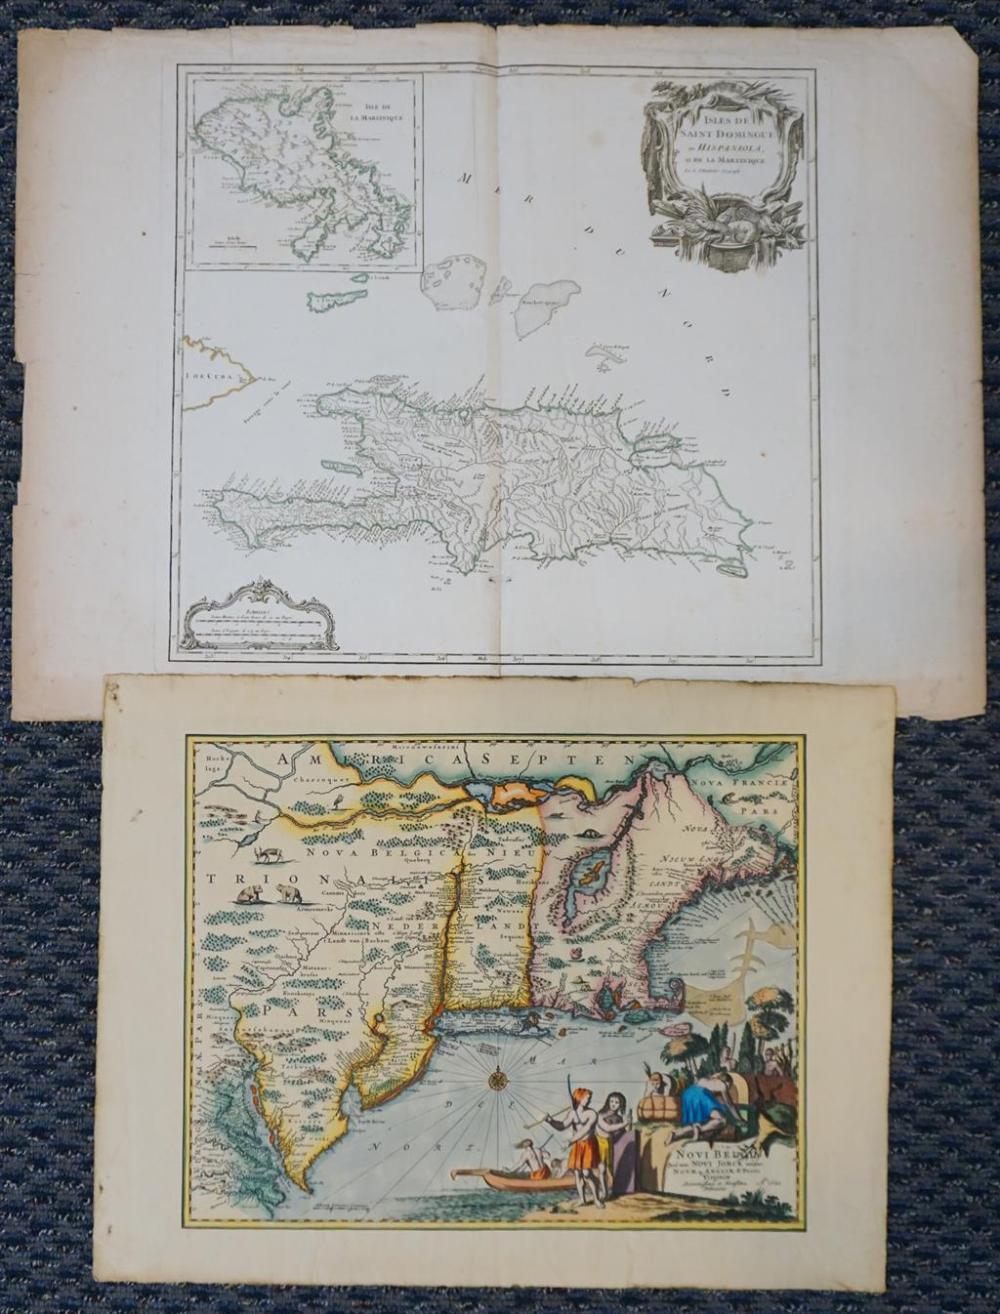 SR. ROBERT MAP OF HAITI AND DOMINICAN